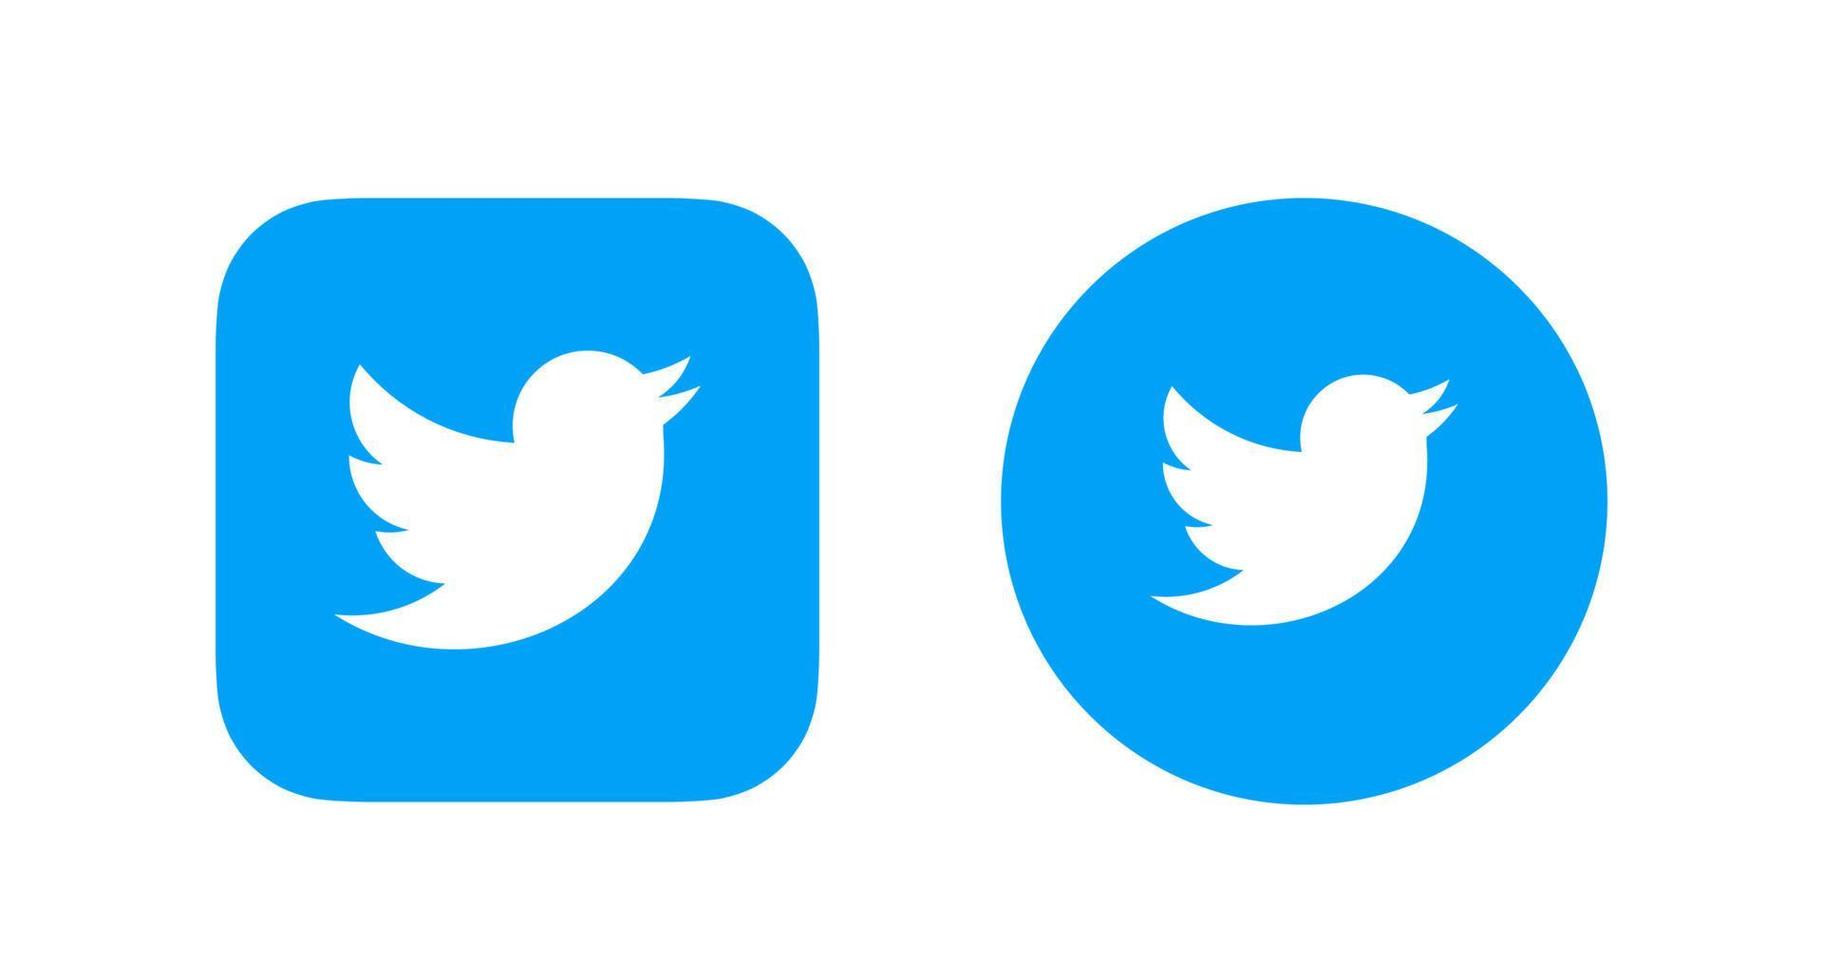 Twitter logotyp, Twitter ikon vektor, Twitter symbol fri vektor